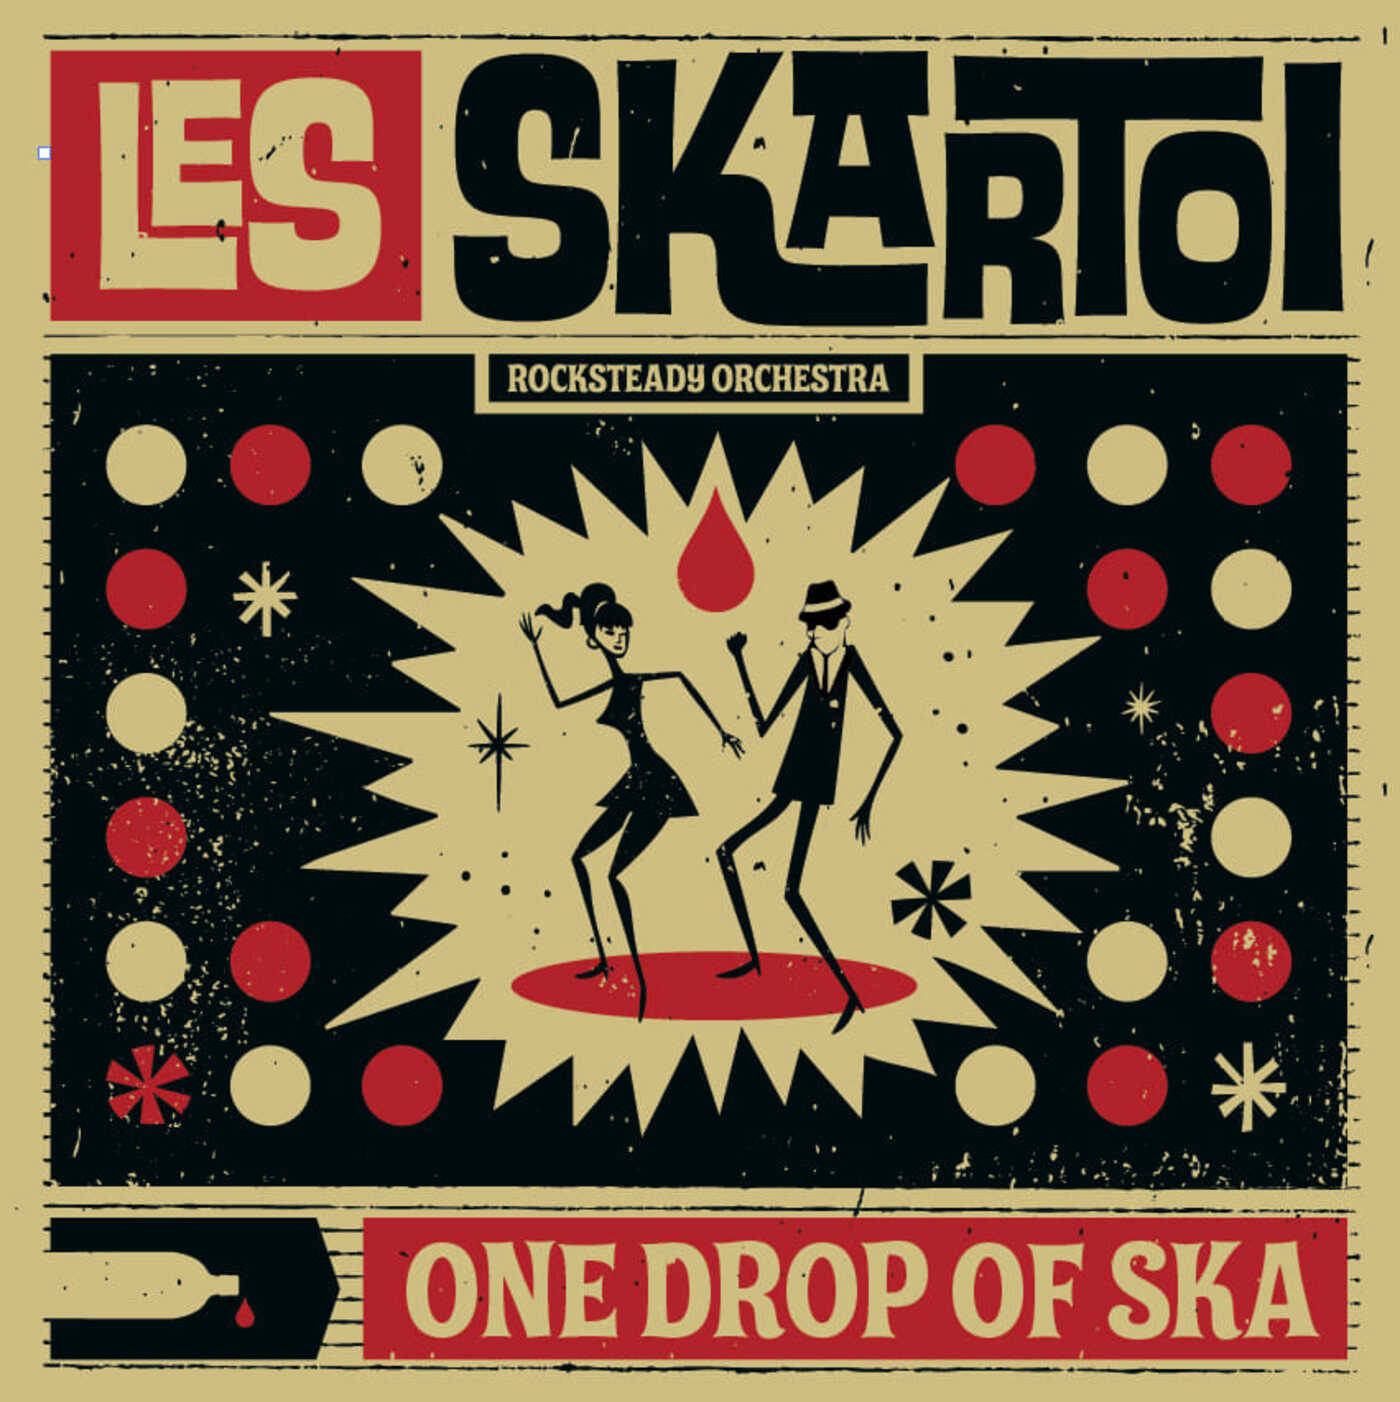 Les SkartOi!-rocksteady orchestra - One Drop Of Ska - Self Release (Vinyl LP)